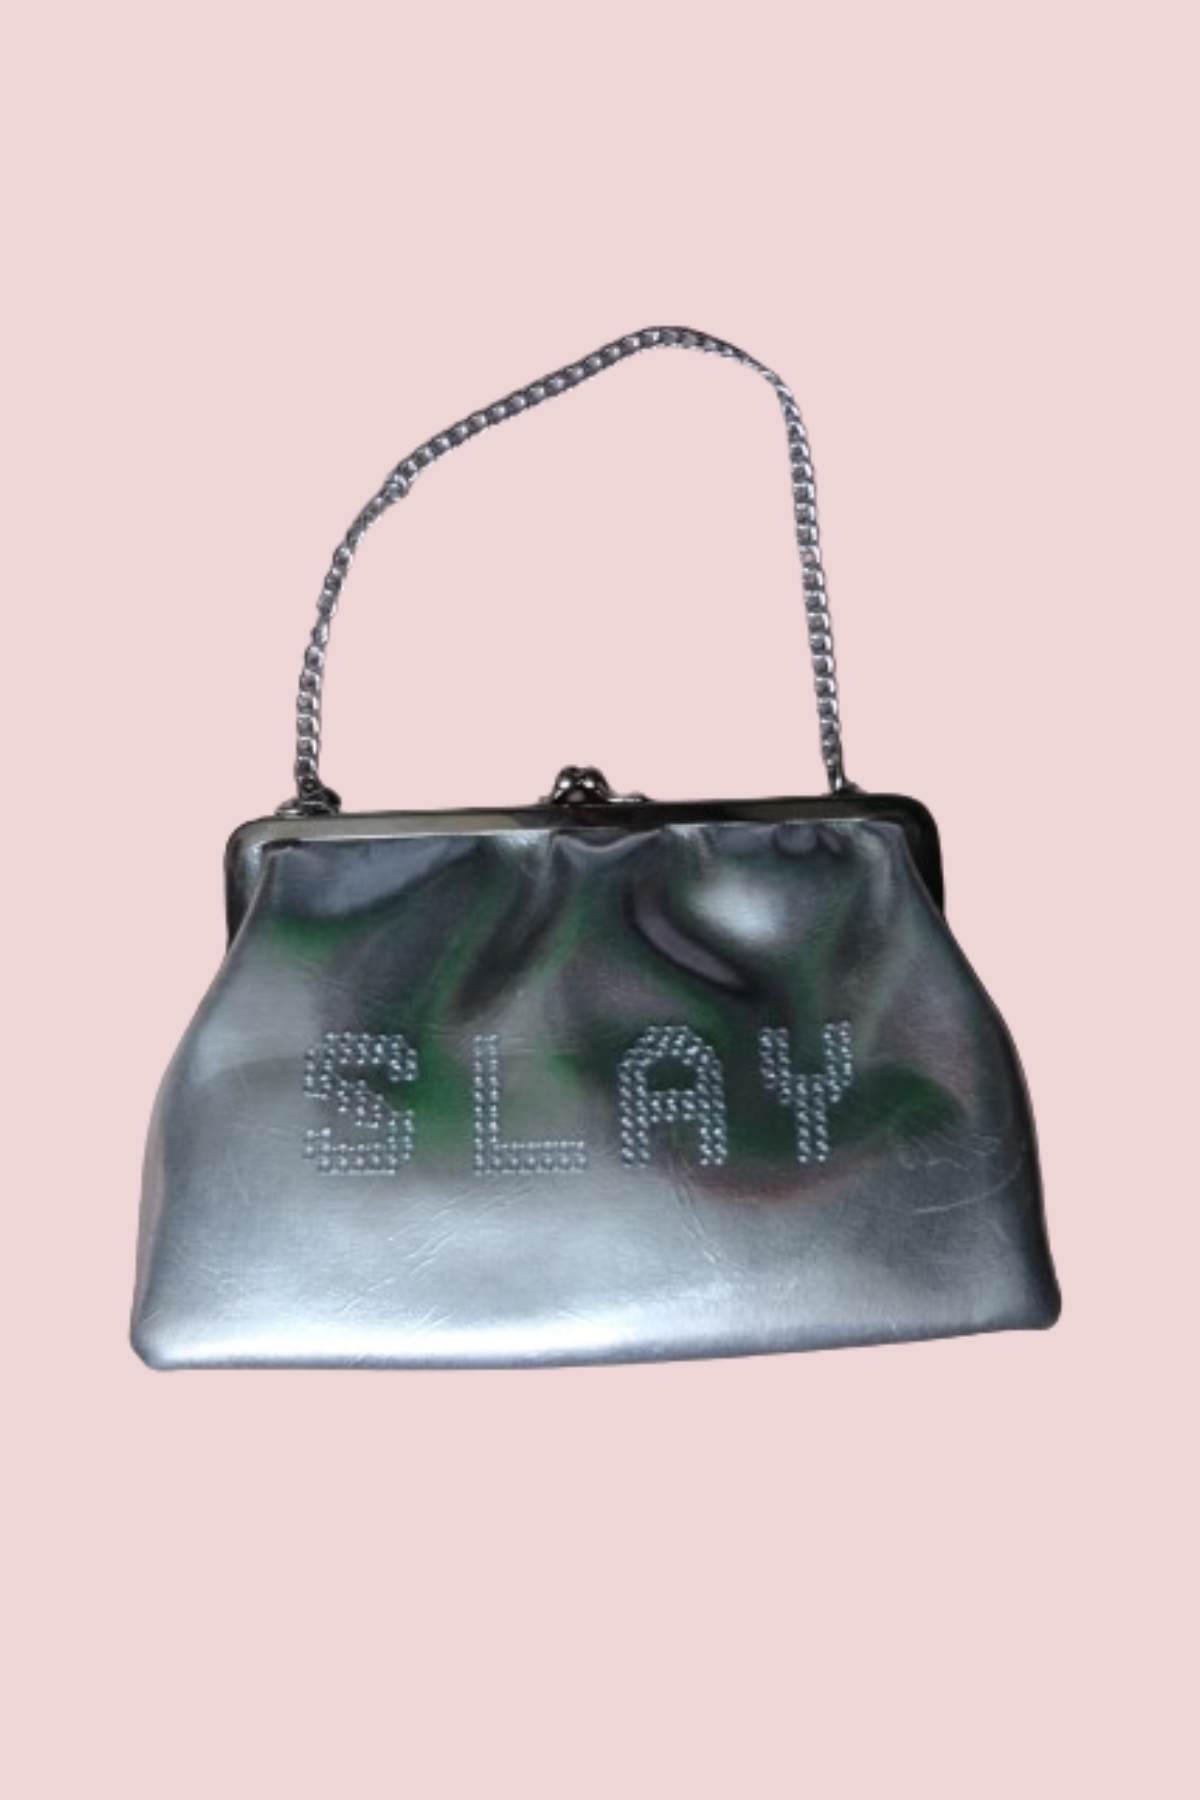 💿✨ Daddy's Gurl - Resurrected Couture Silver "SLAY" Rhinestone Purse Clutch ✨💎